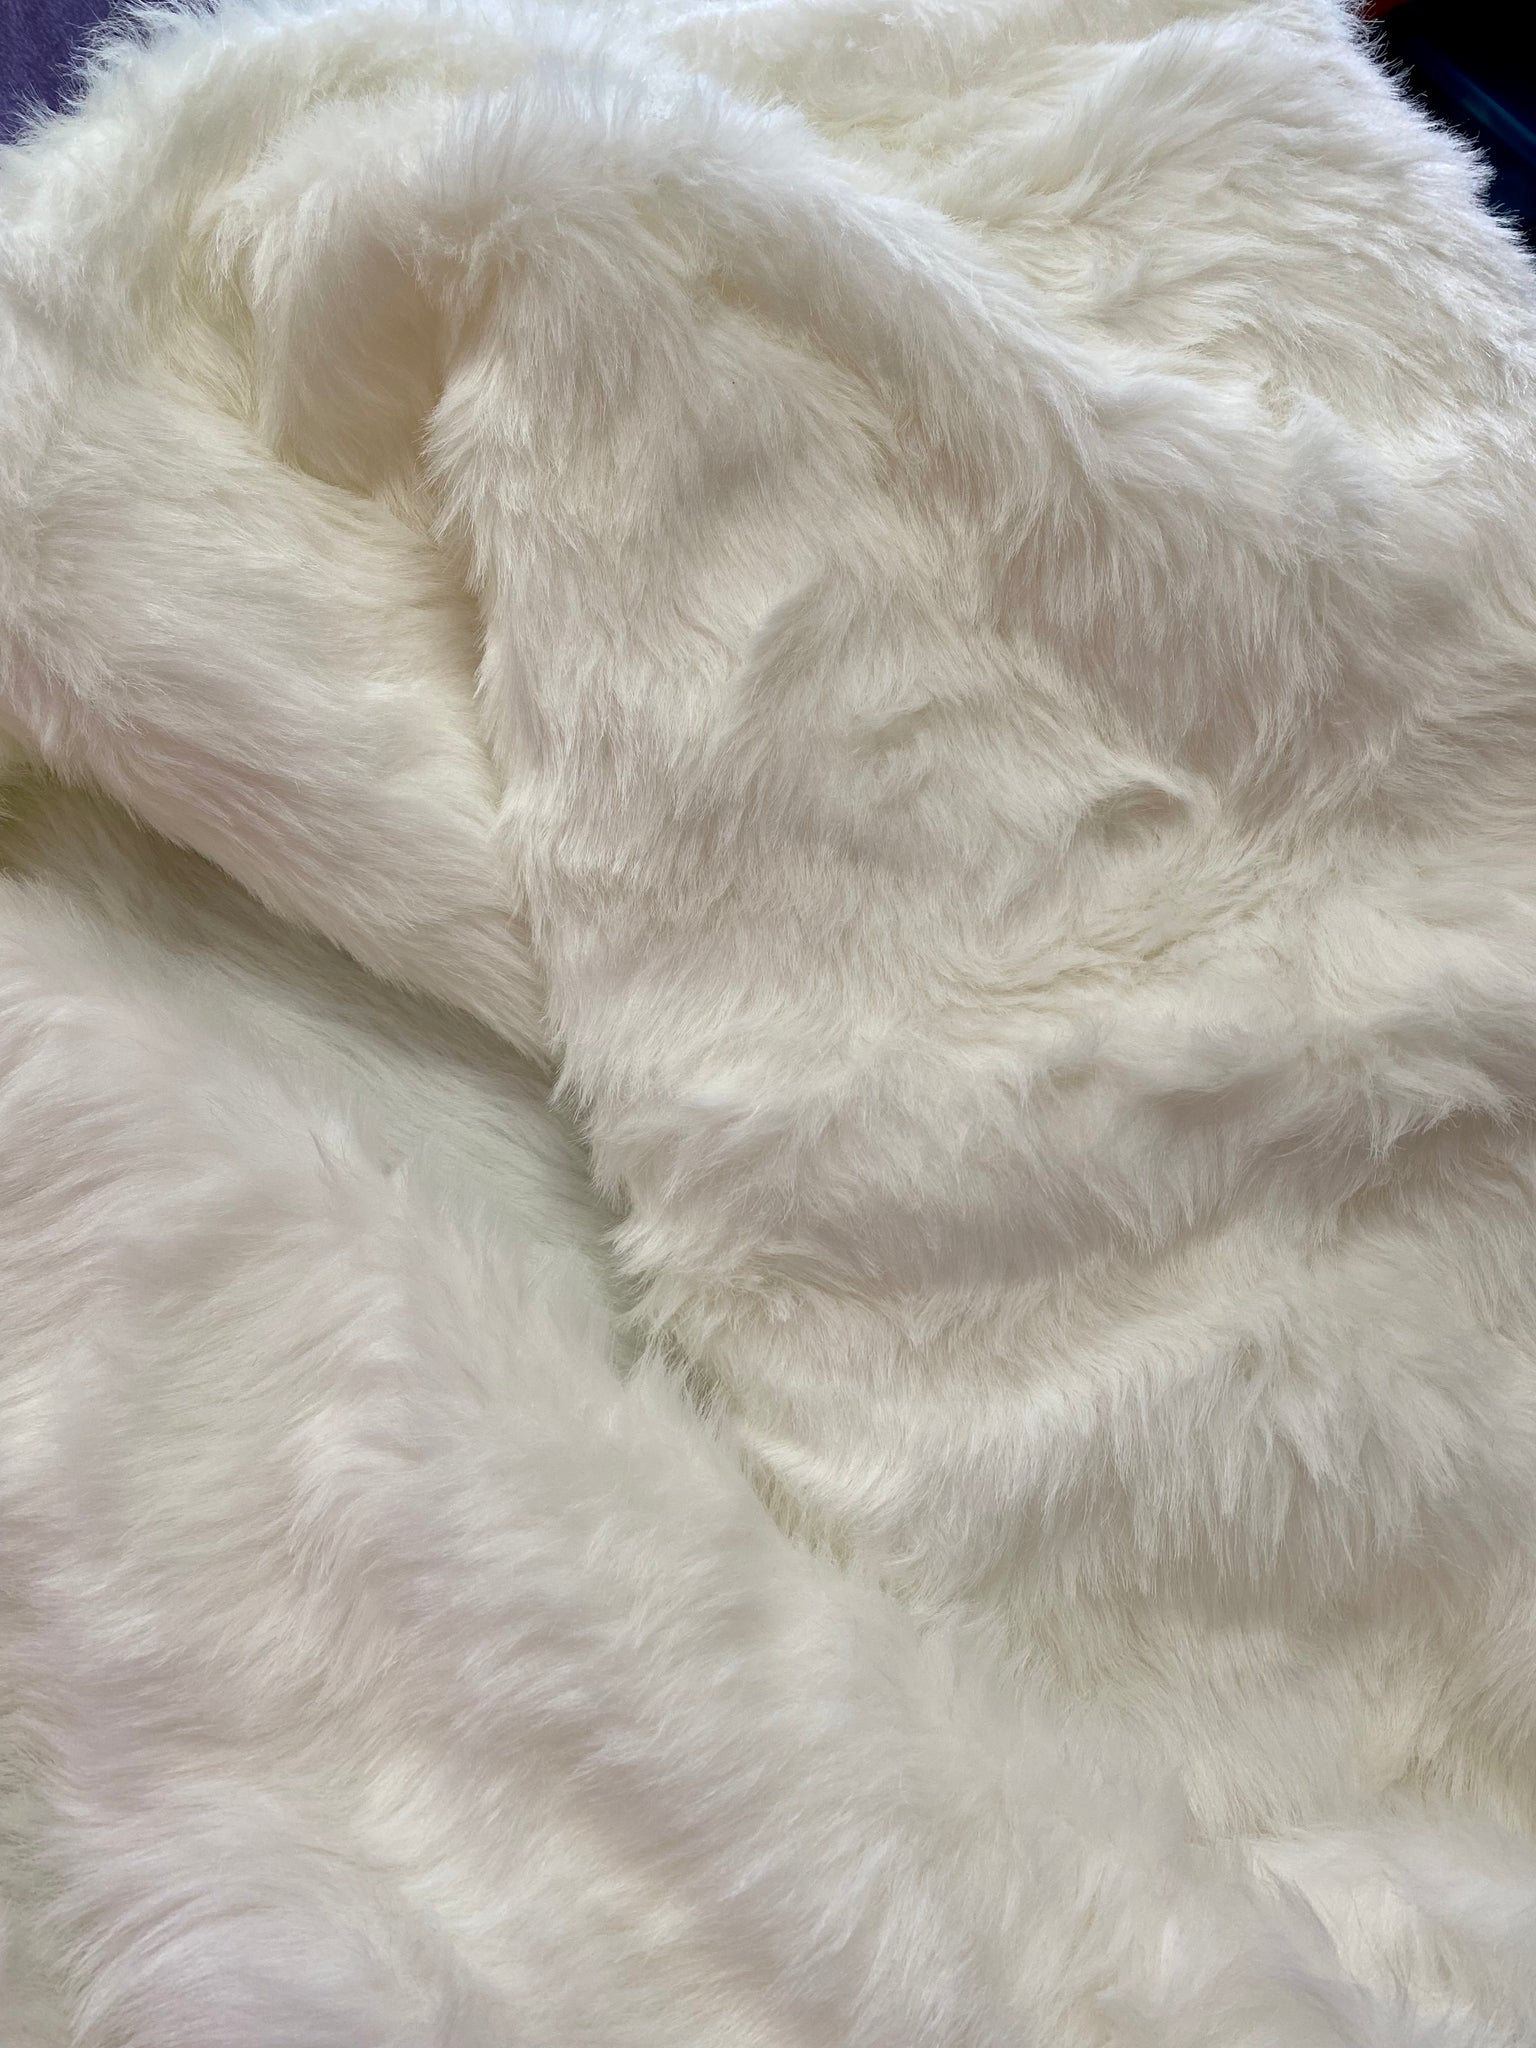  60 Wide Faux Fur Fabric - White and Silver Glitter